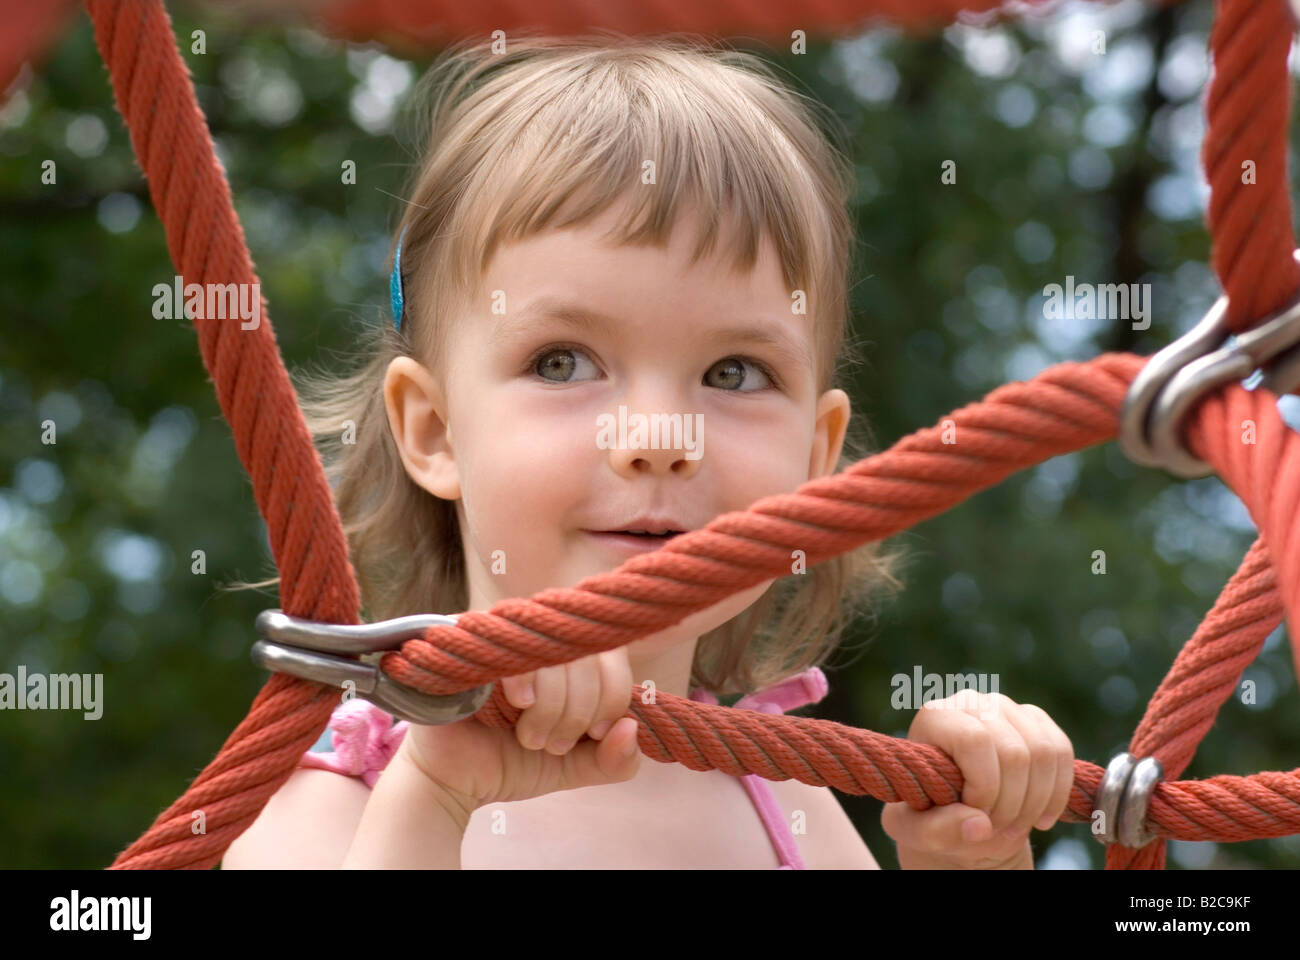 Little Girl at Playground on Rope Monkey Bars Stock Photo